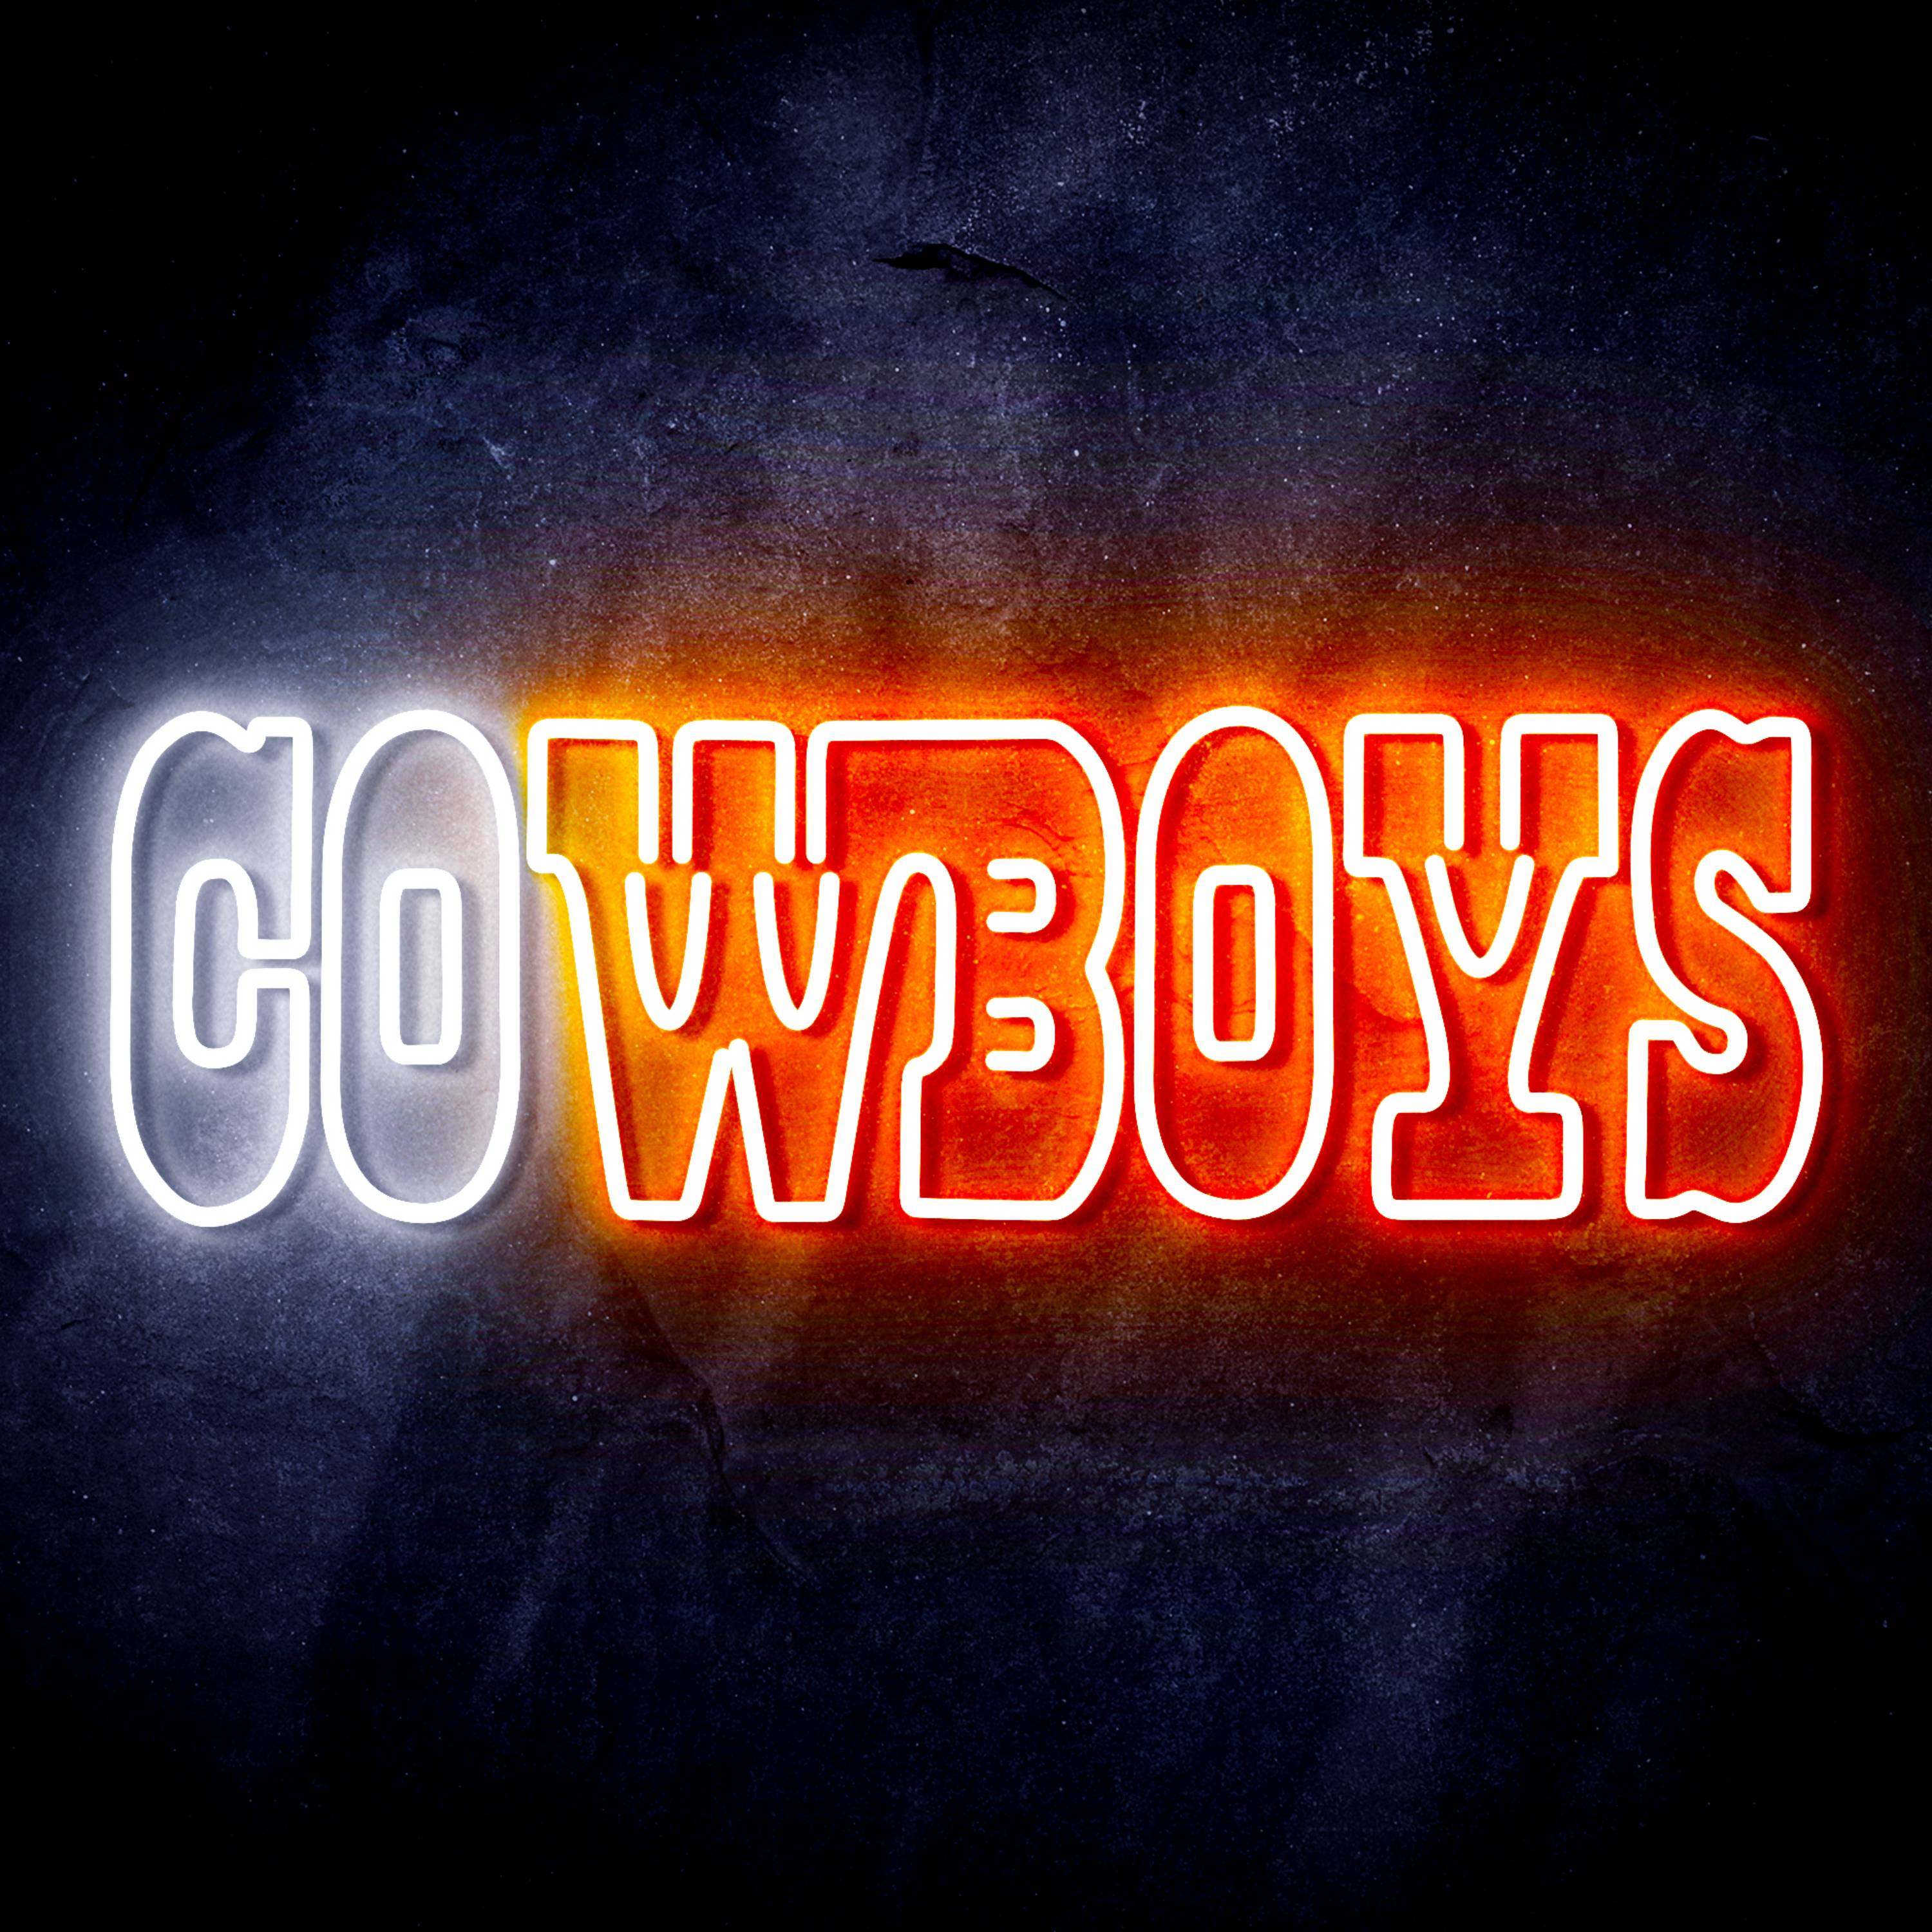 NFL COWBOYS LED Neon Sign